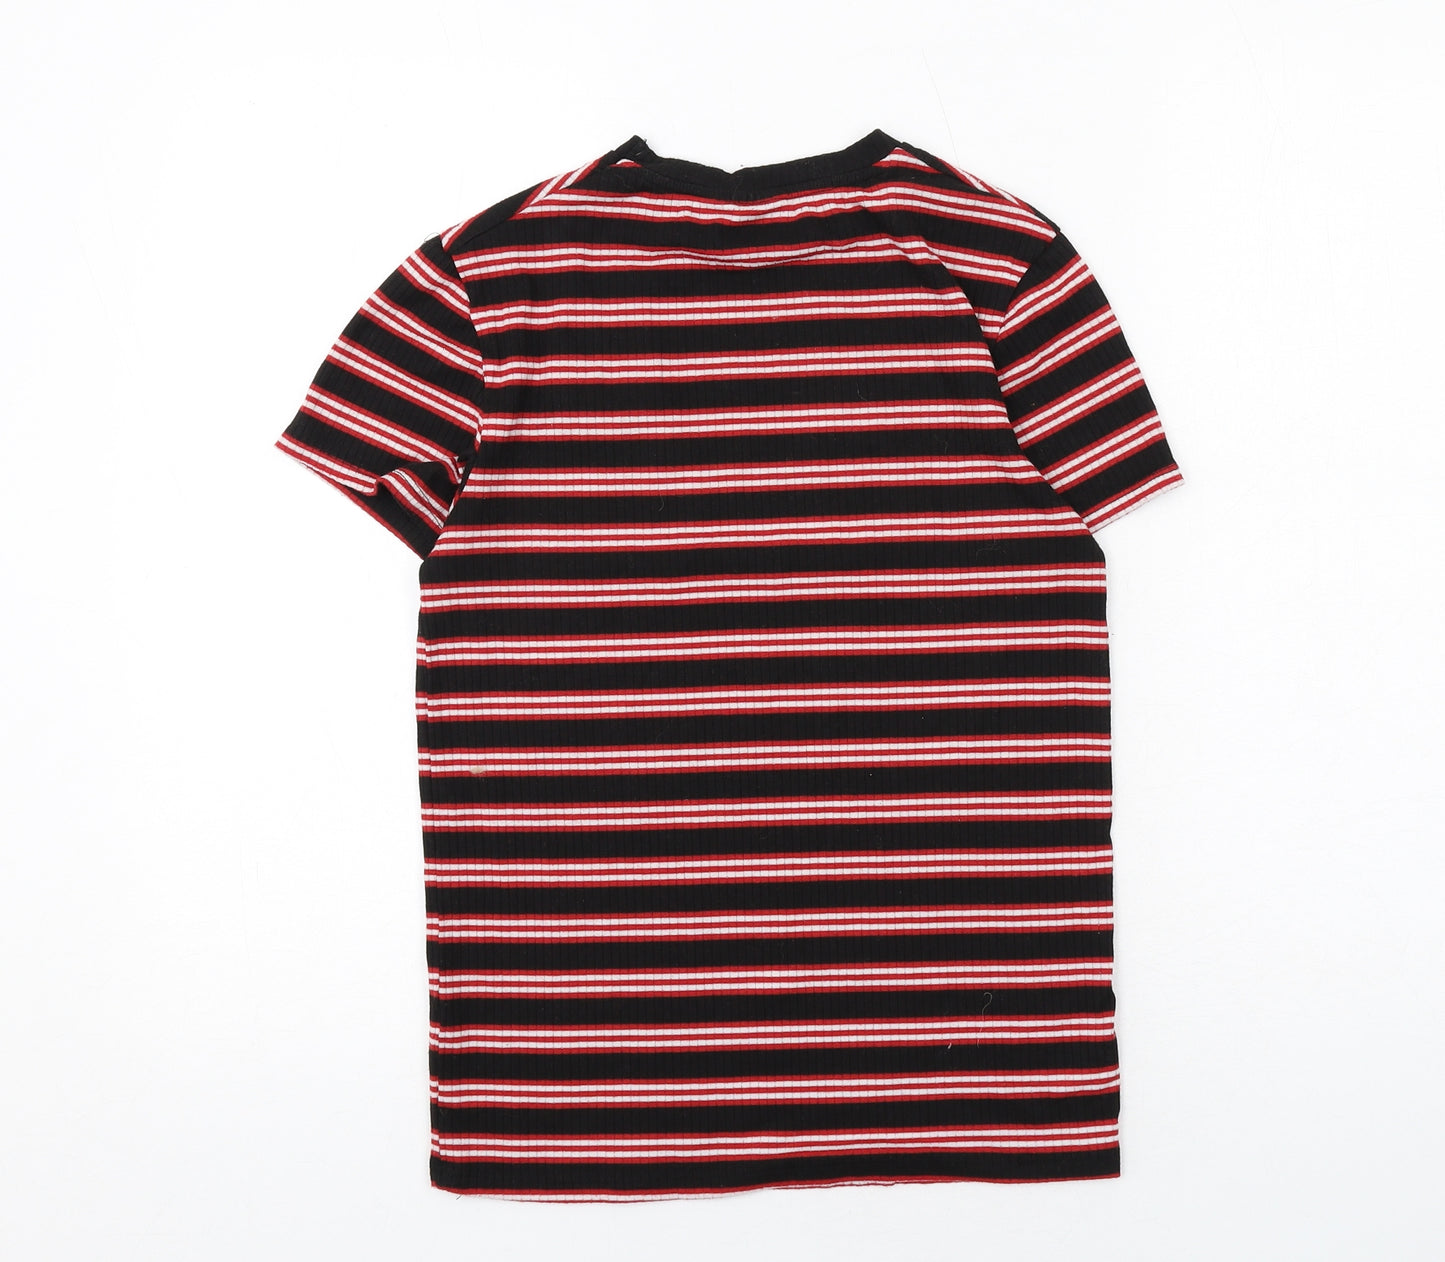 Disney Womens Black Striped Polyester Basic T-Shirt Size XS Crew Neck - Minnie Mouse